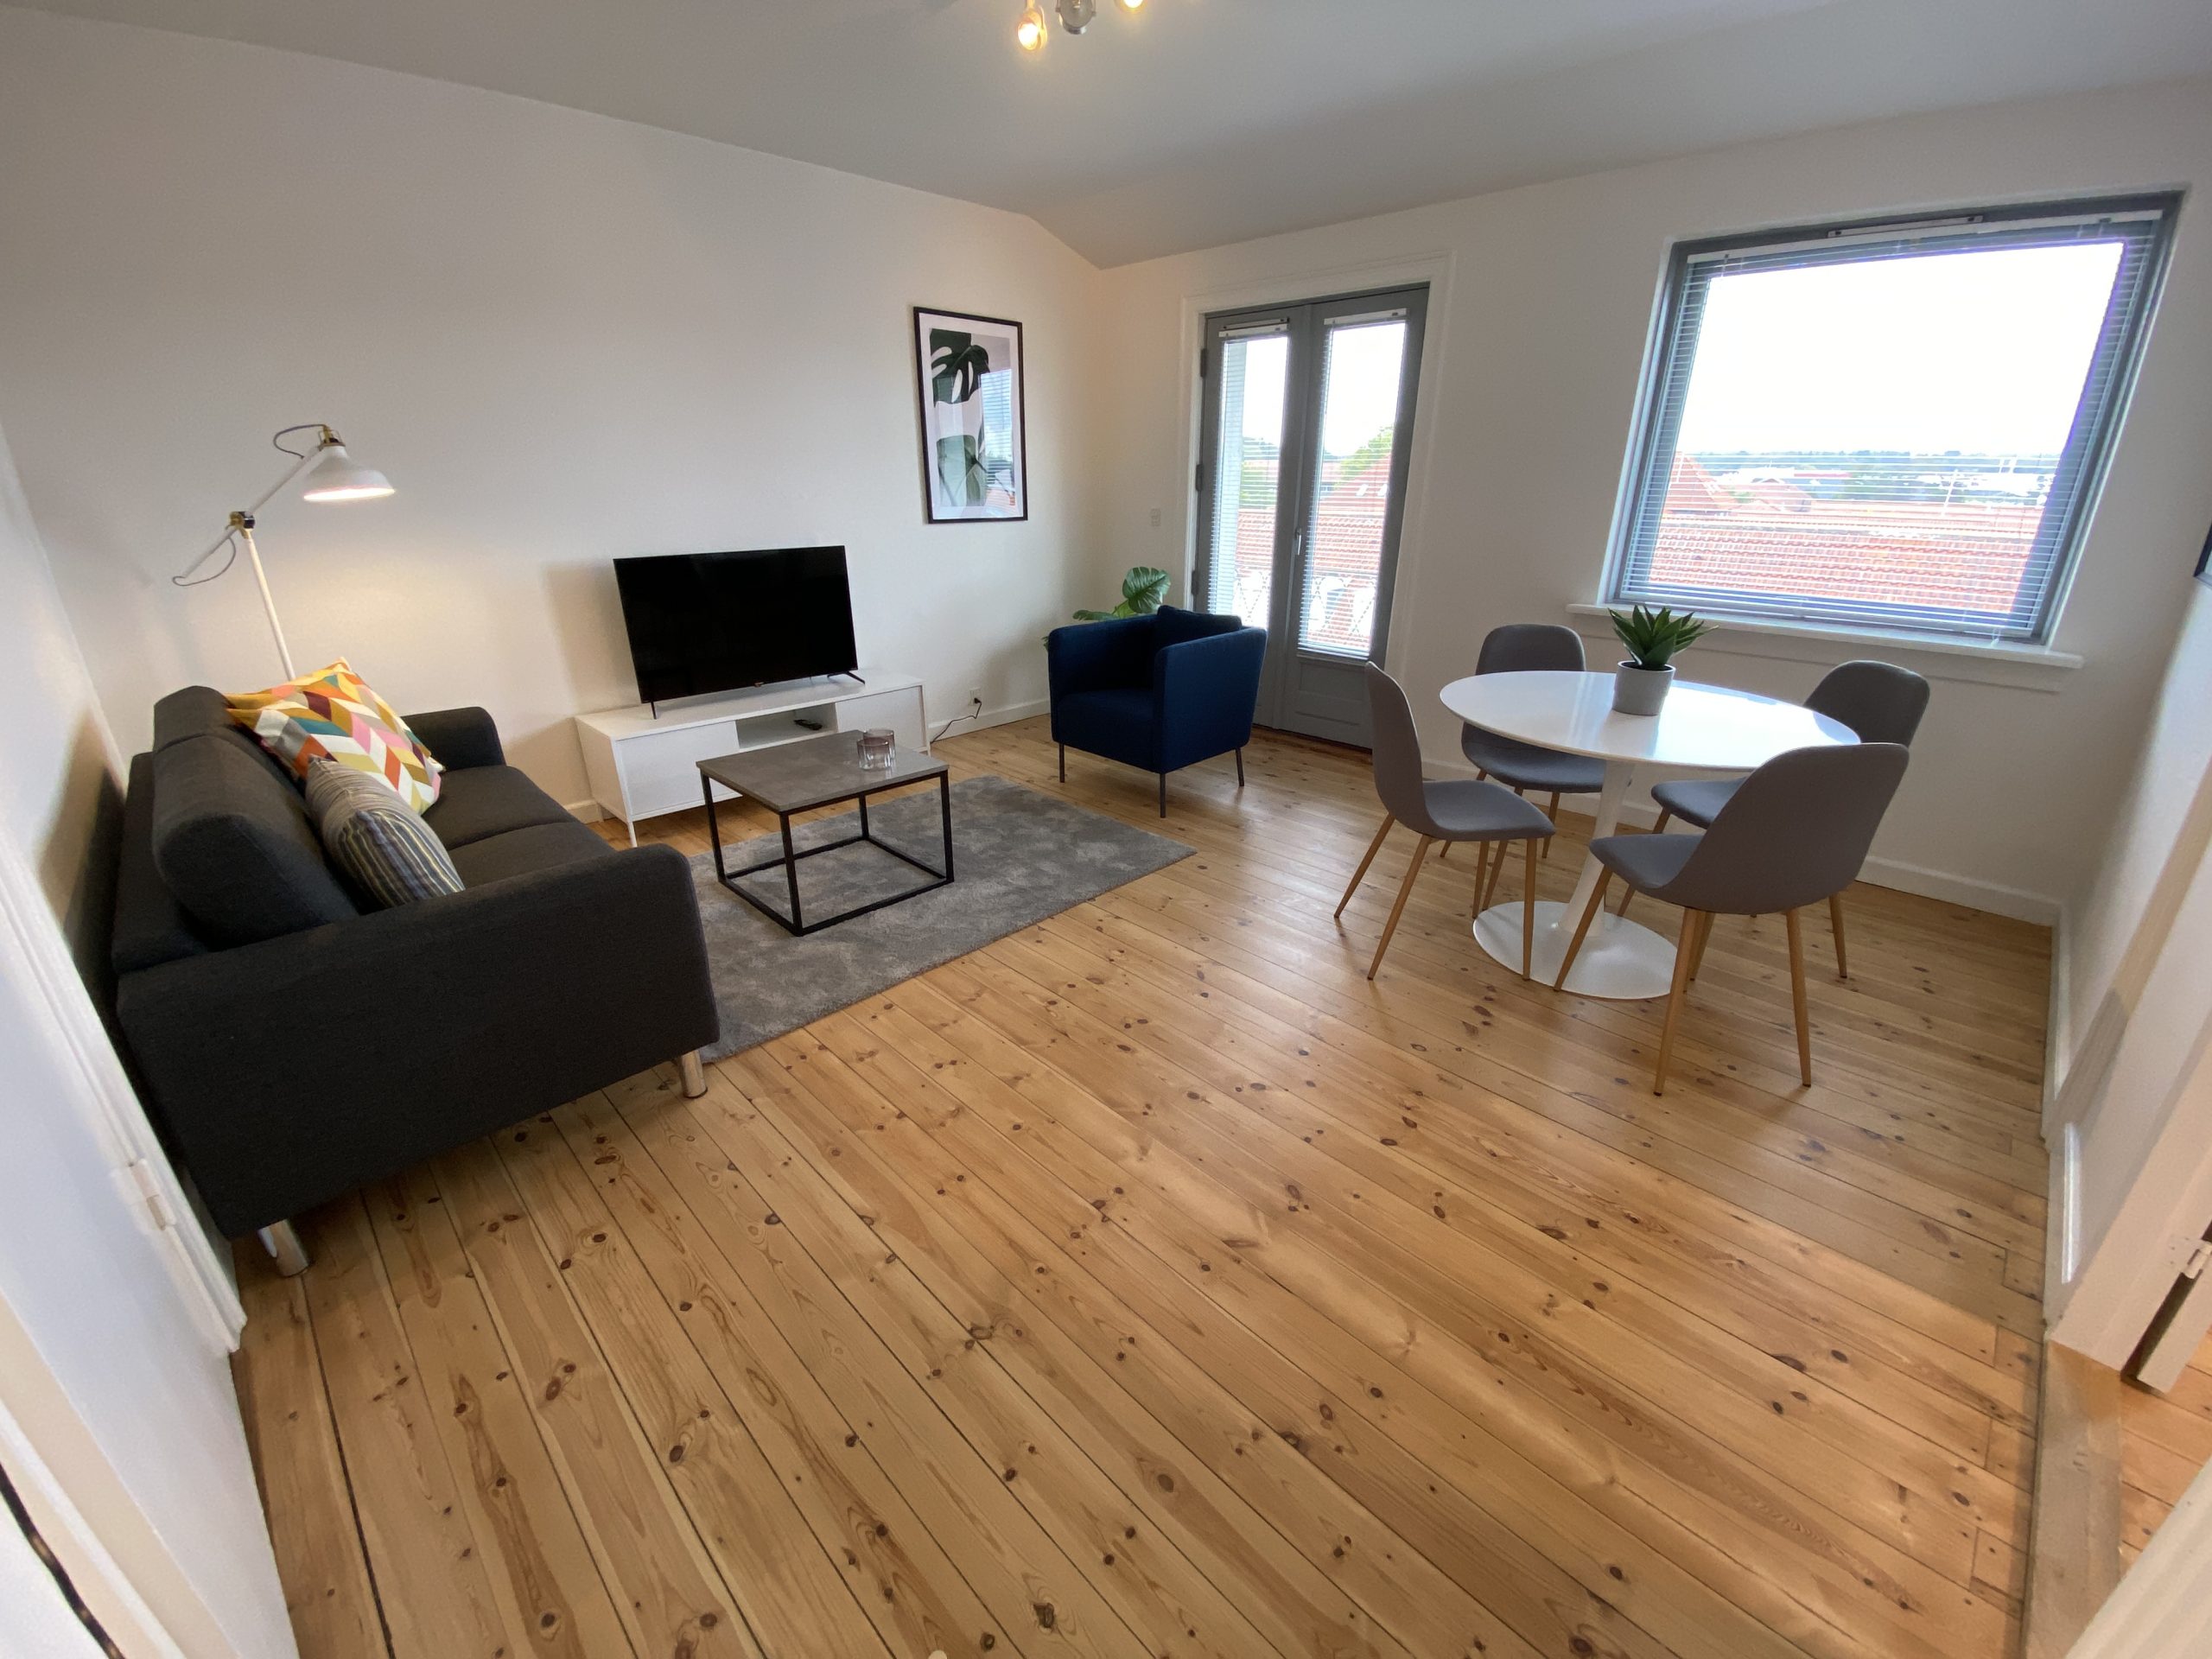 1133 – Furnished apartment in Birkerød